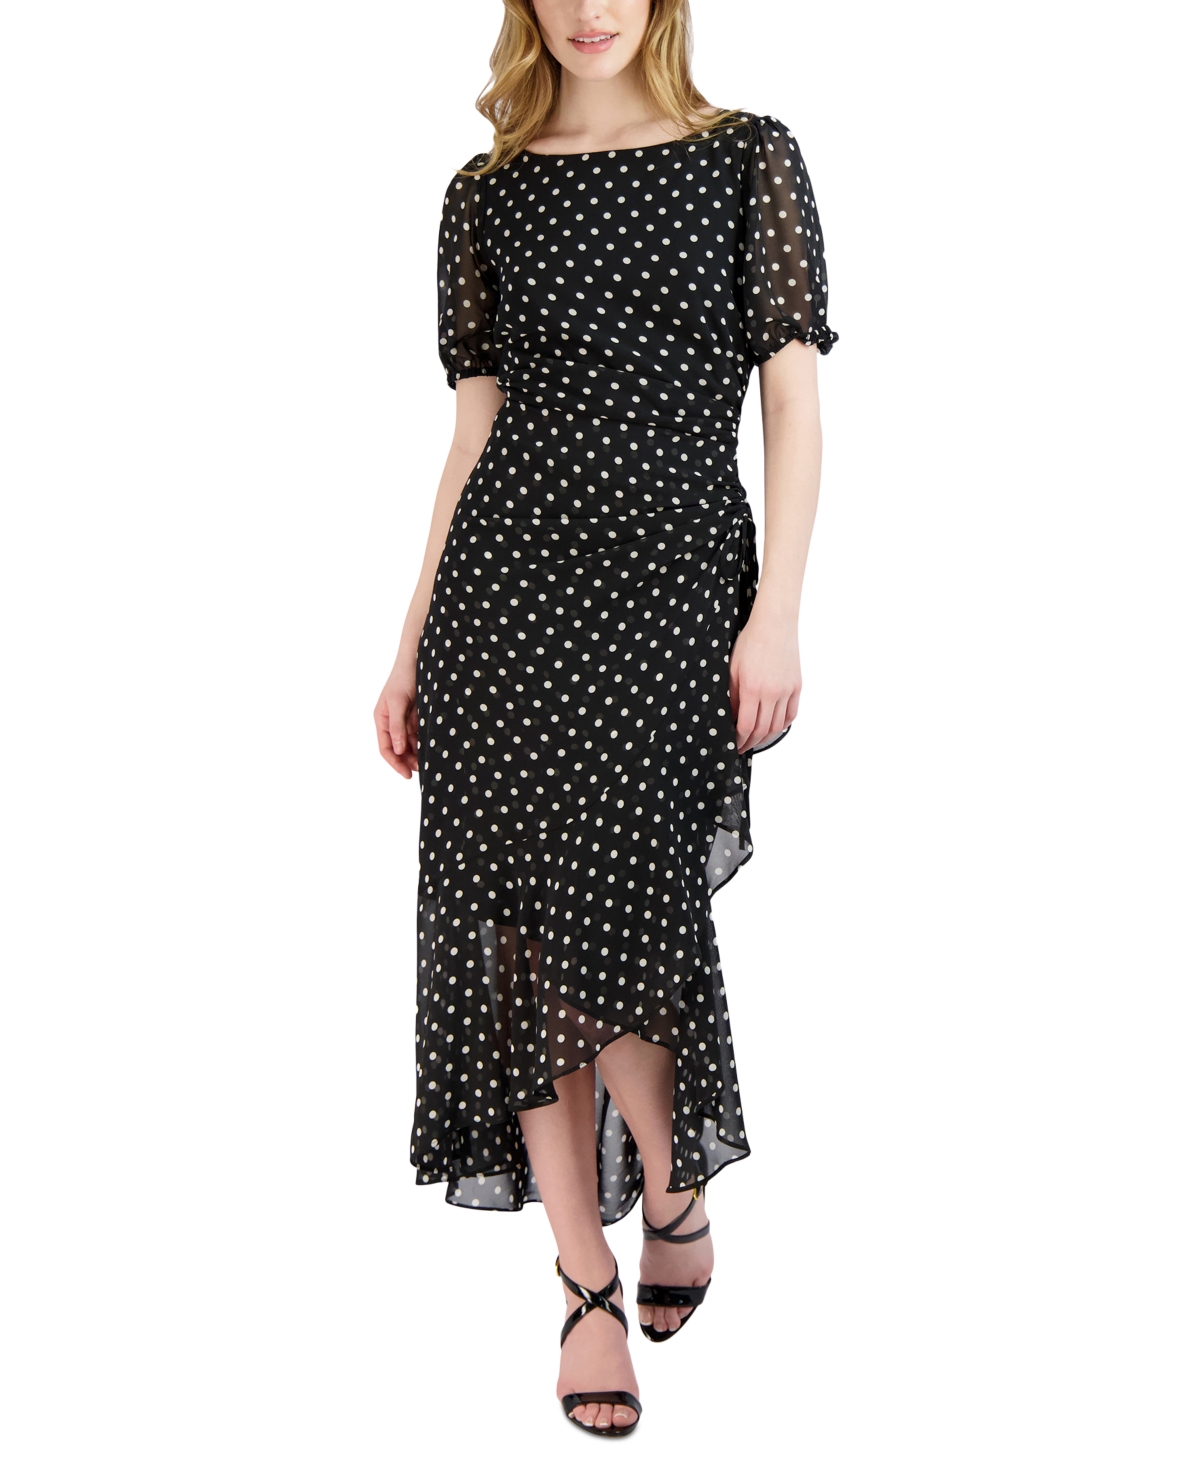 Women's Polka Dot Ruffled Maxi Dress - Black/white